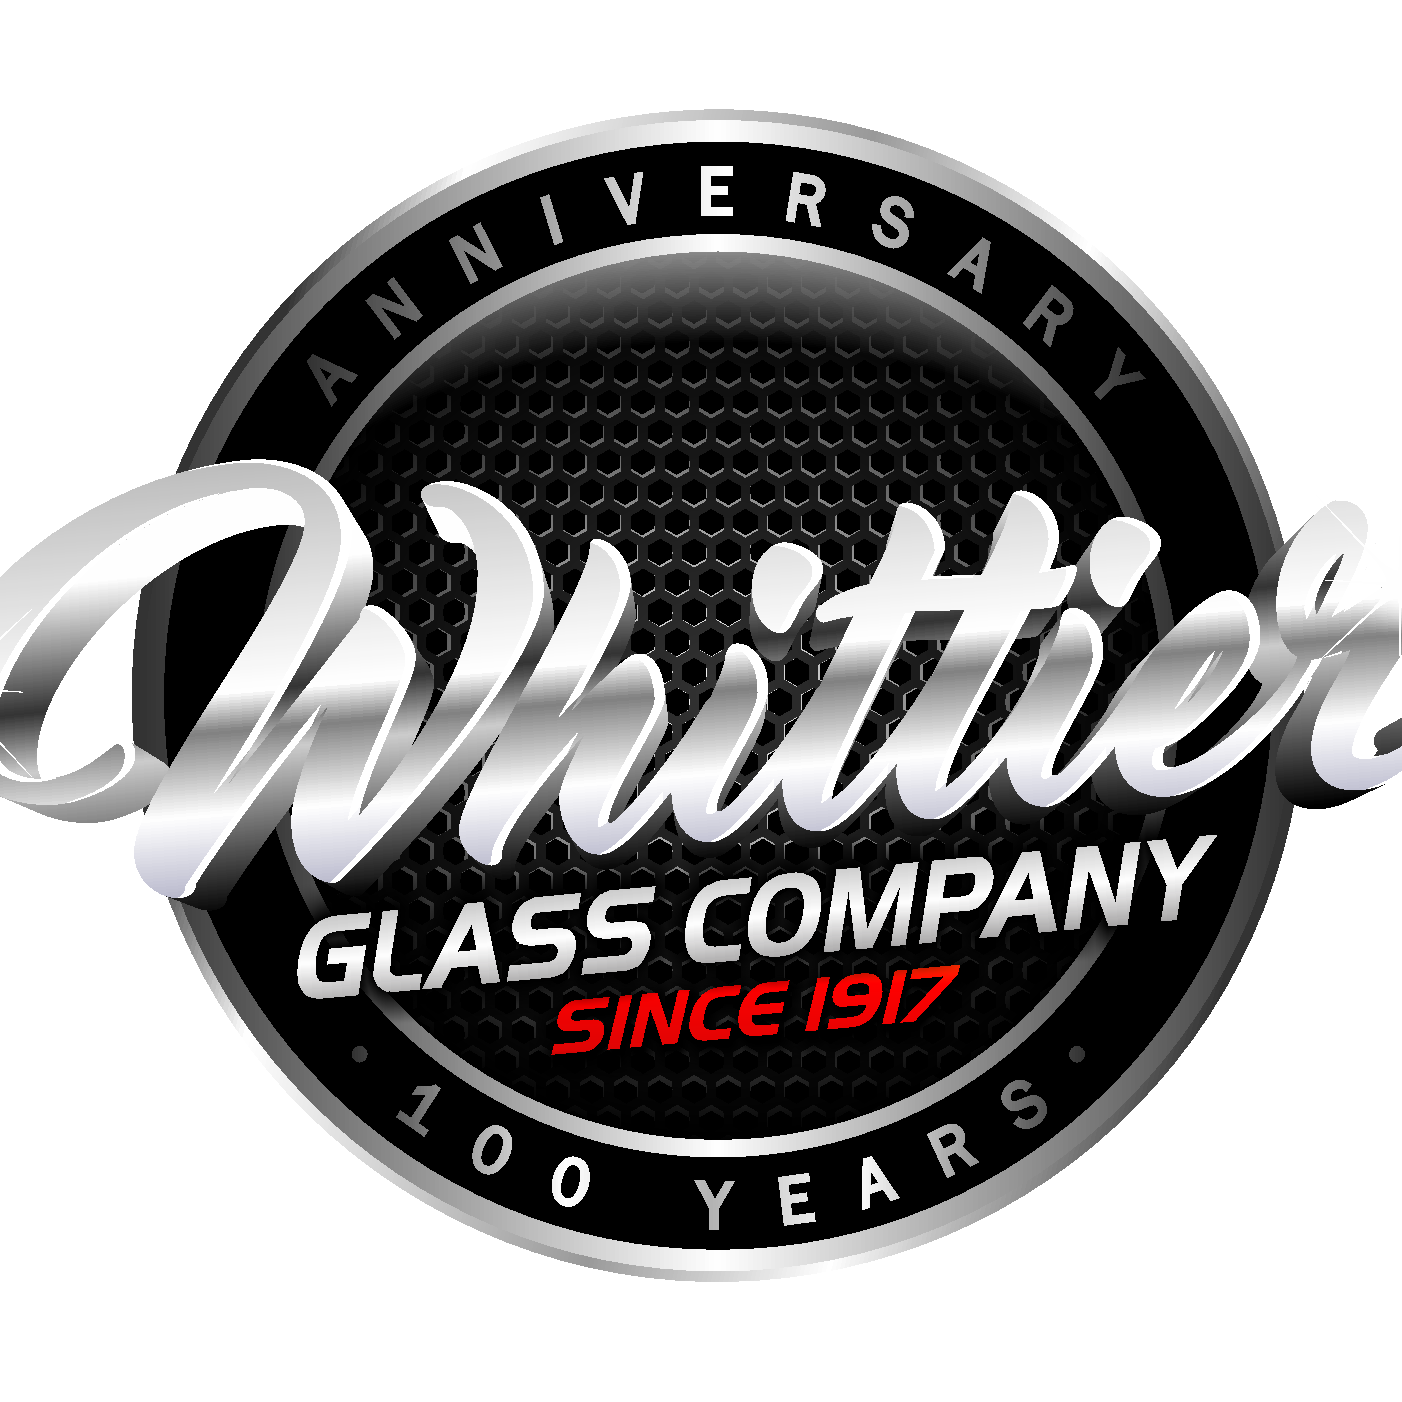 Whittier Glass & Mirror Co